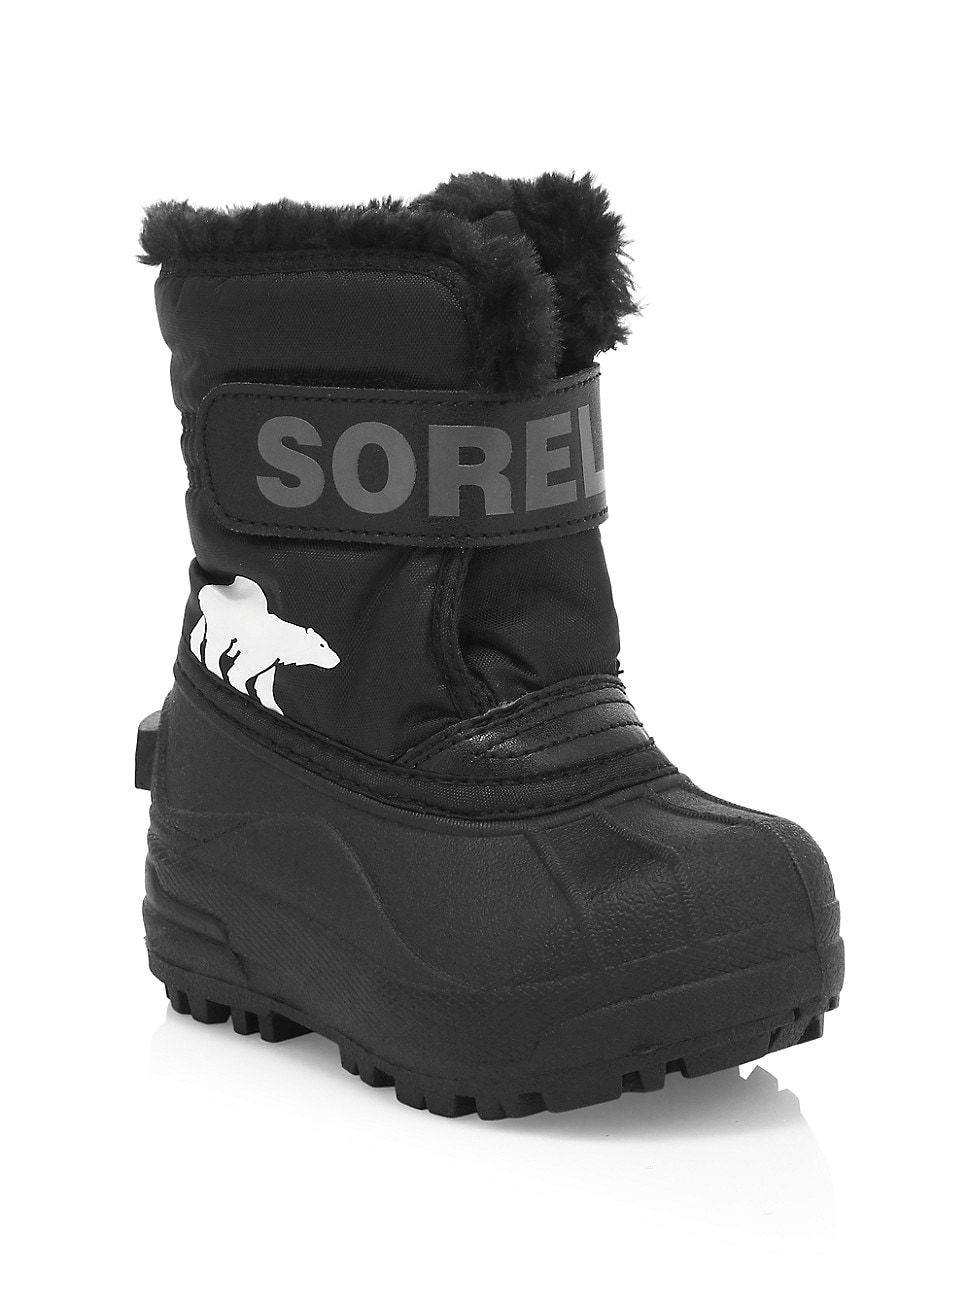 Sorel Baby's & Little Kid's Snow Commander Faux Fur-Lined Waterproof Boots - Black Charcoal - Size 1 | Saks Fifth Avenue